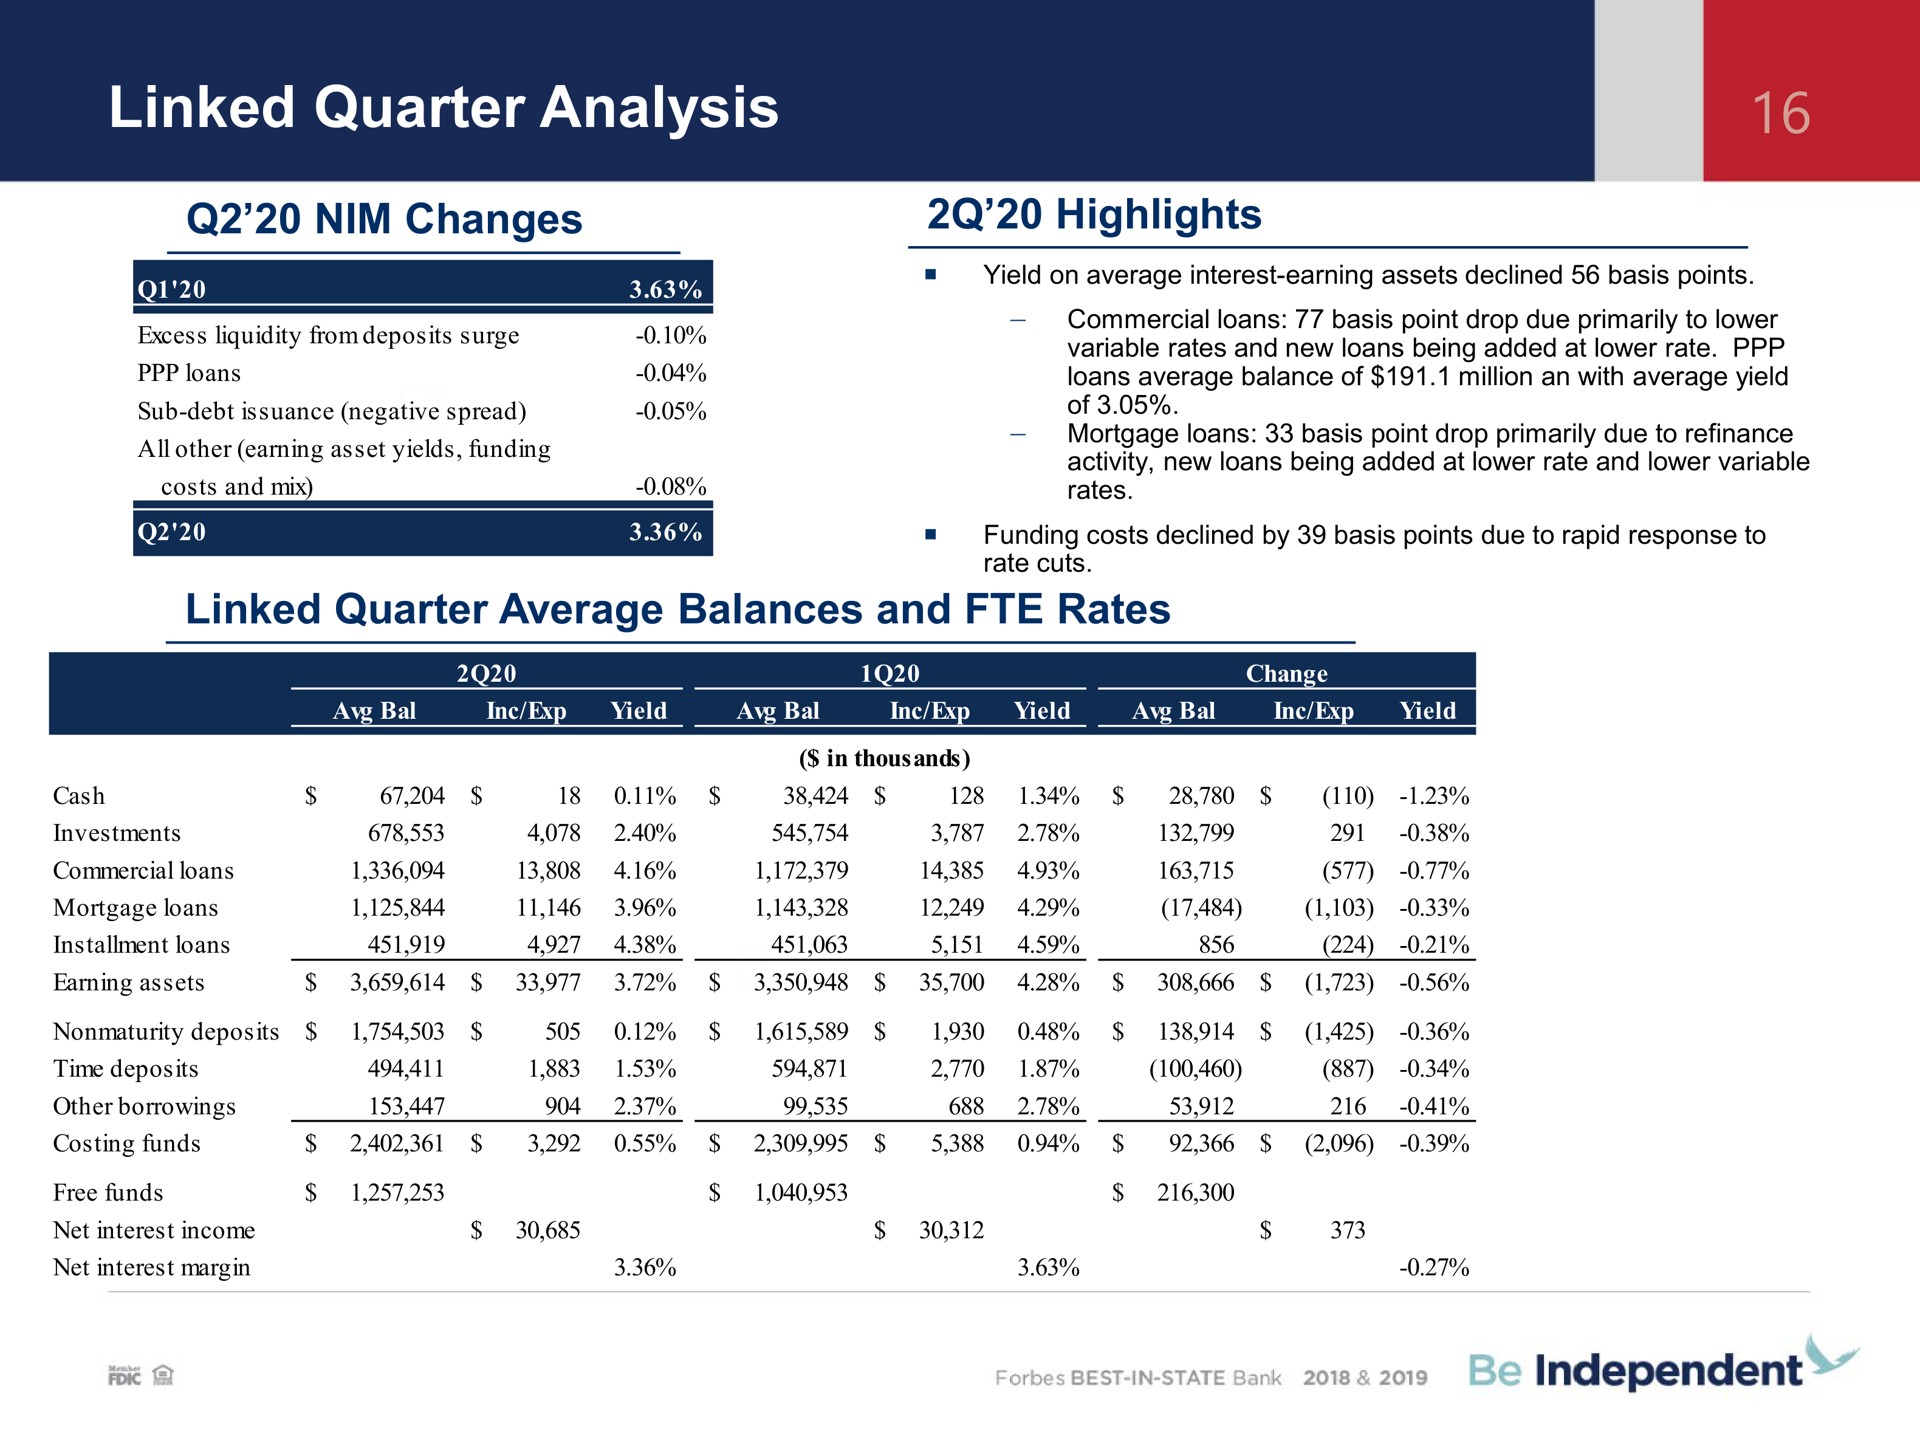 linked quarter analysis nim changes highlights linked quarter average balances and rates | Independent Bank Corp